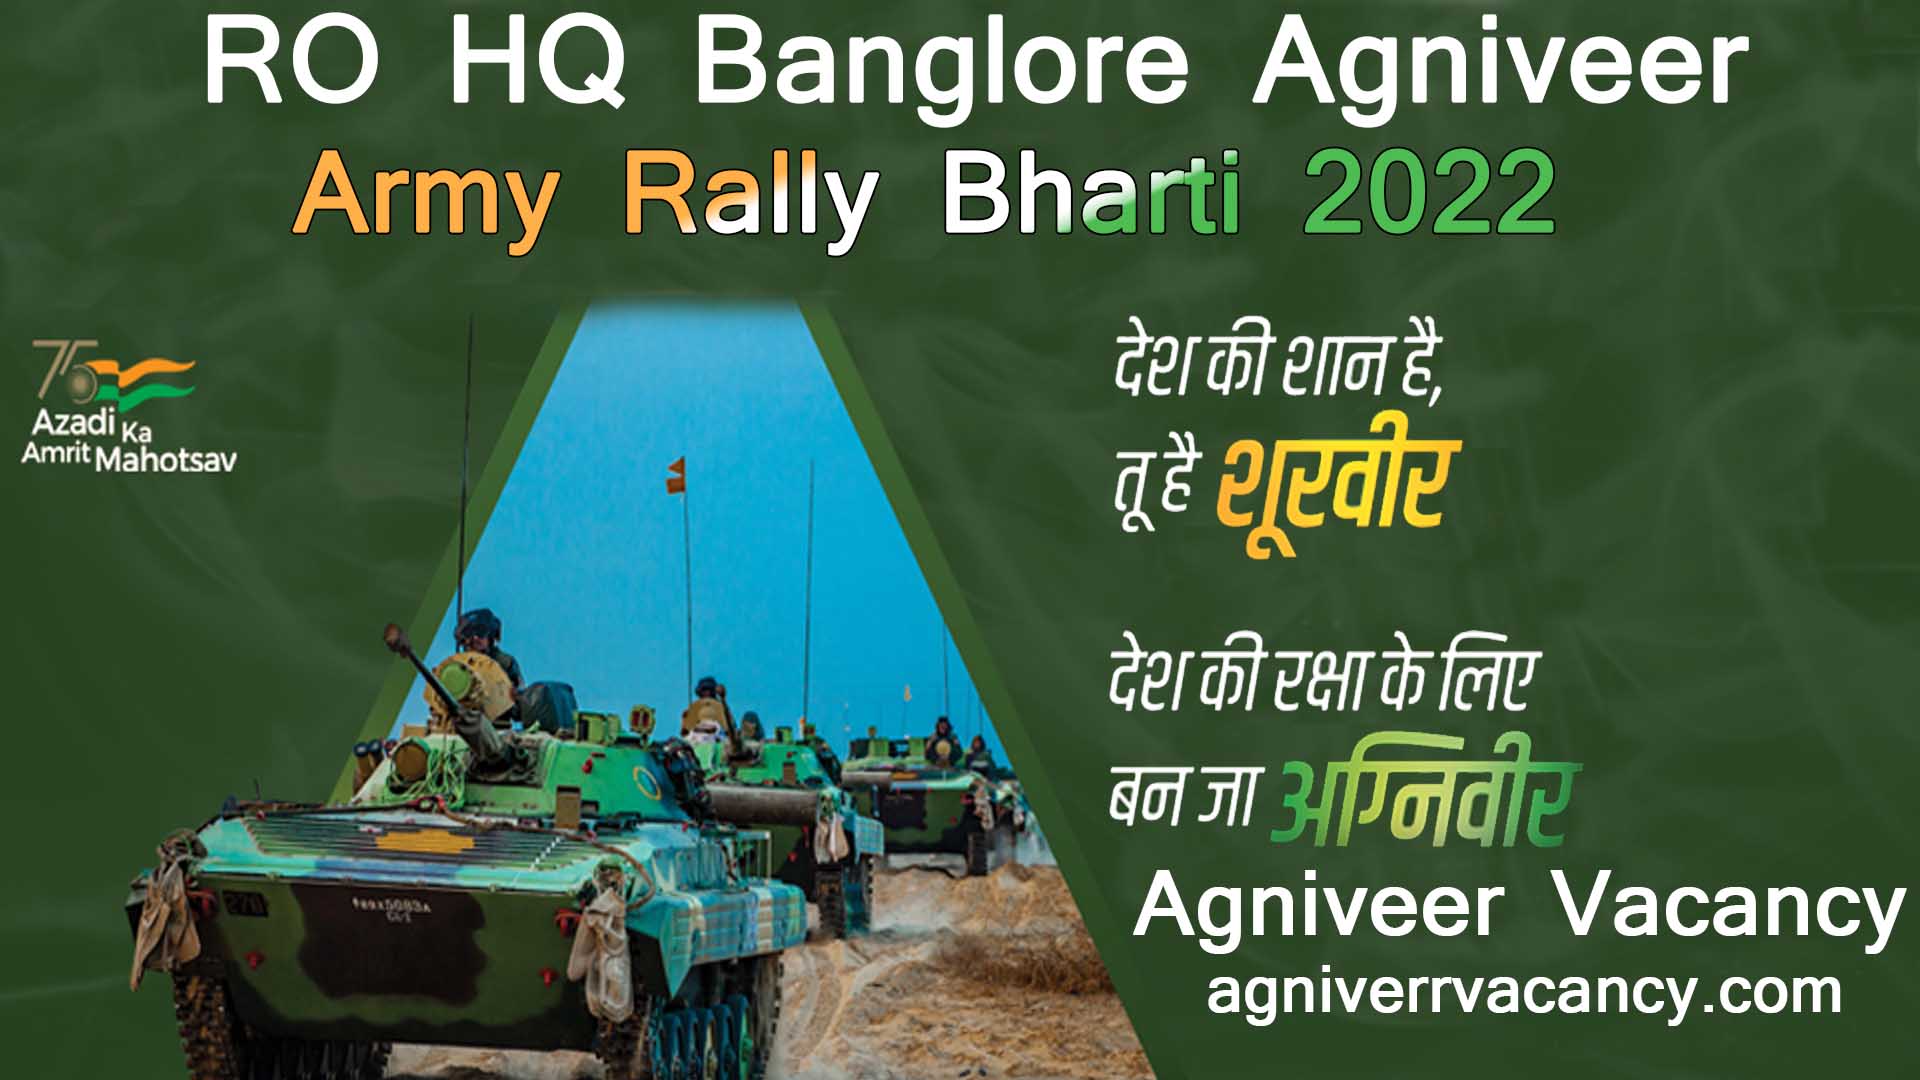 Banglore Agniveer Army Rally Bharti 2022